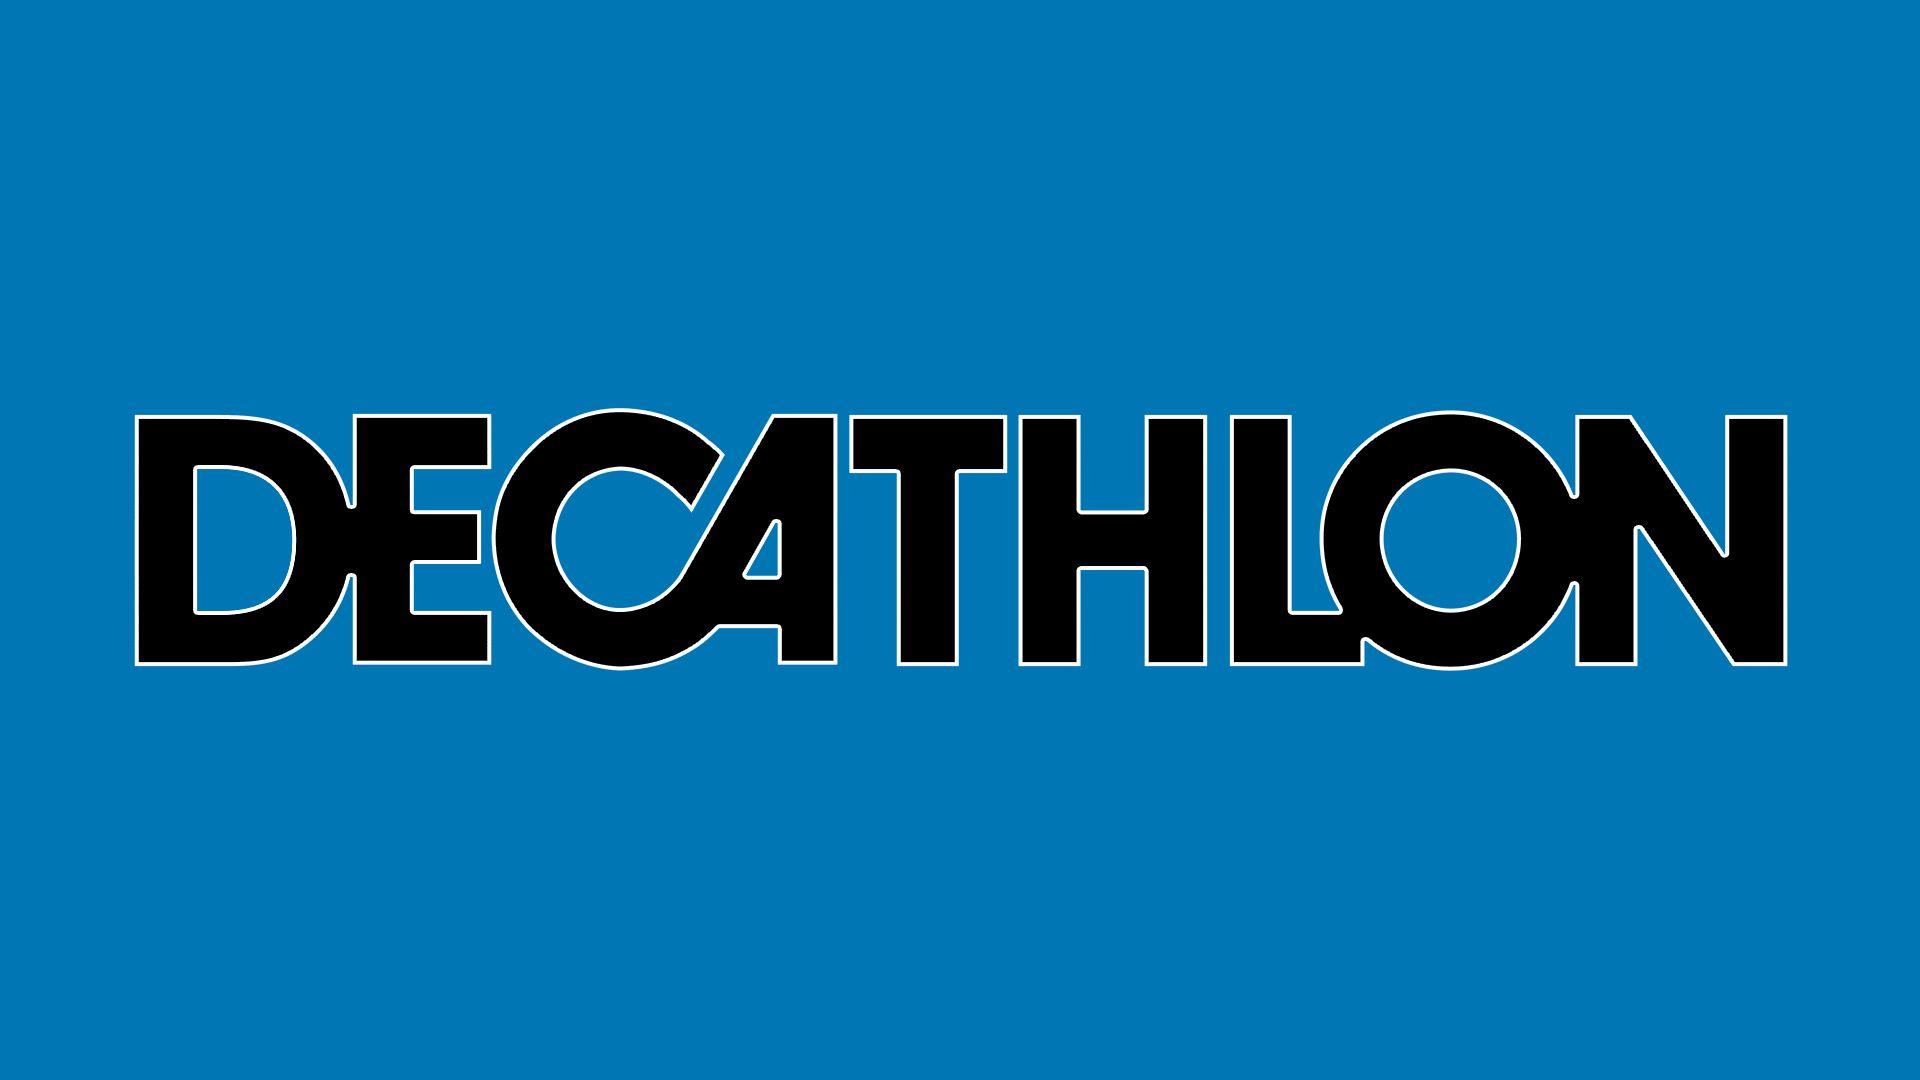 Decathlon Logo - Décathlon logo histoire et signification, evolution, symbole Décathlon